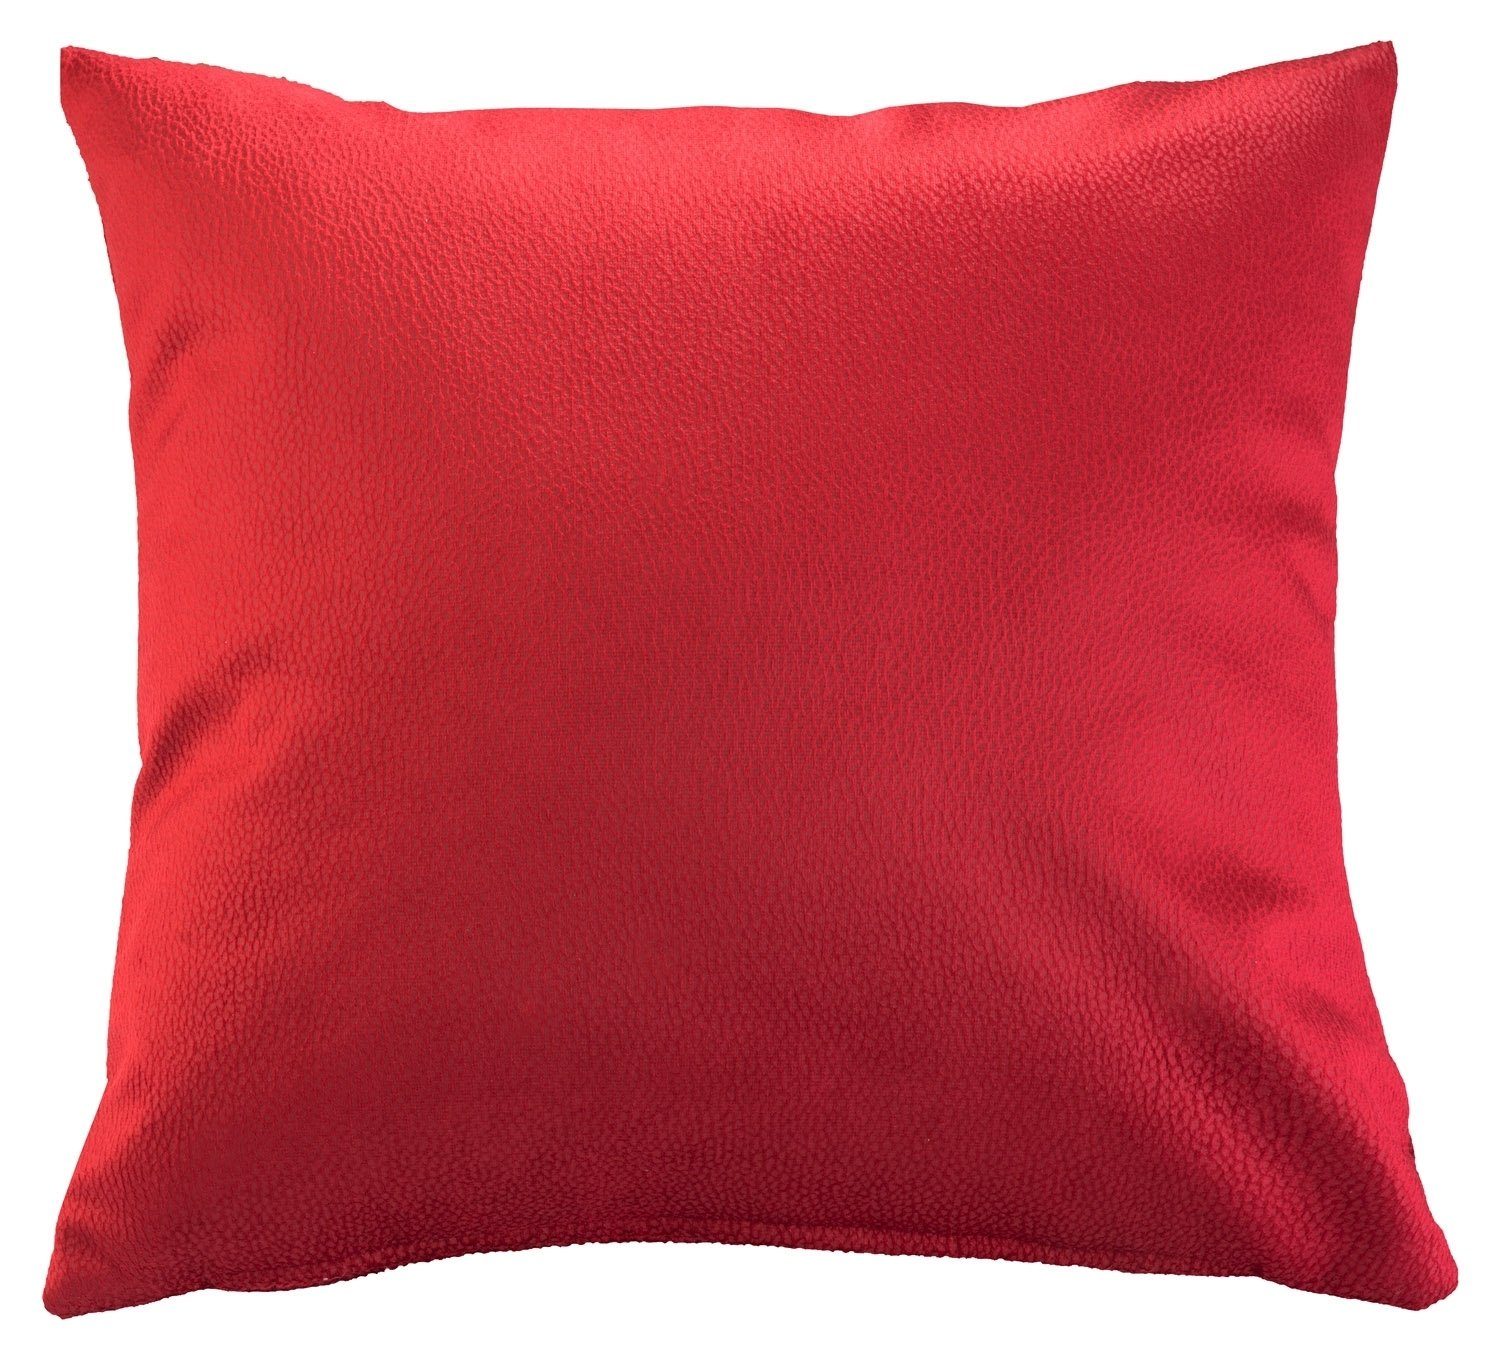 Kissenhülle BELLA, Rot, Unifarben, Kunstfaser, 48 x 48 cm, (1 Stück)